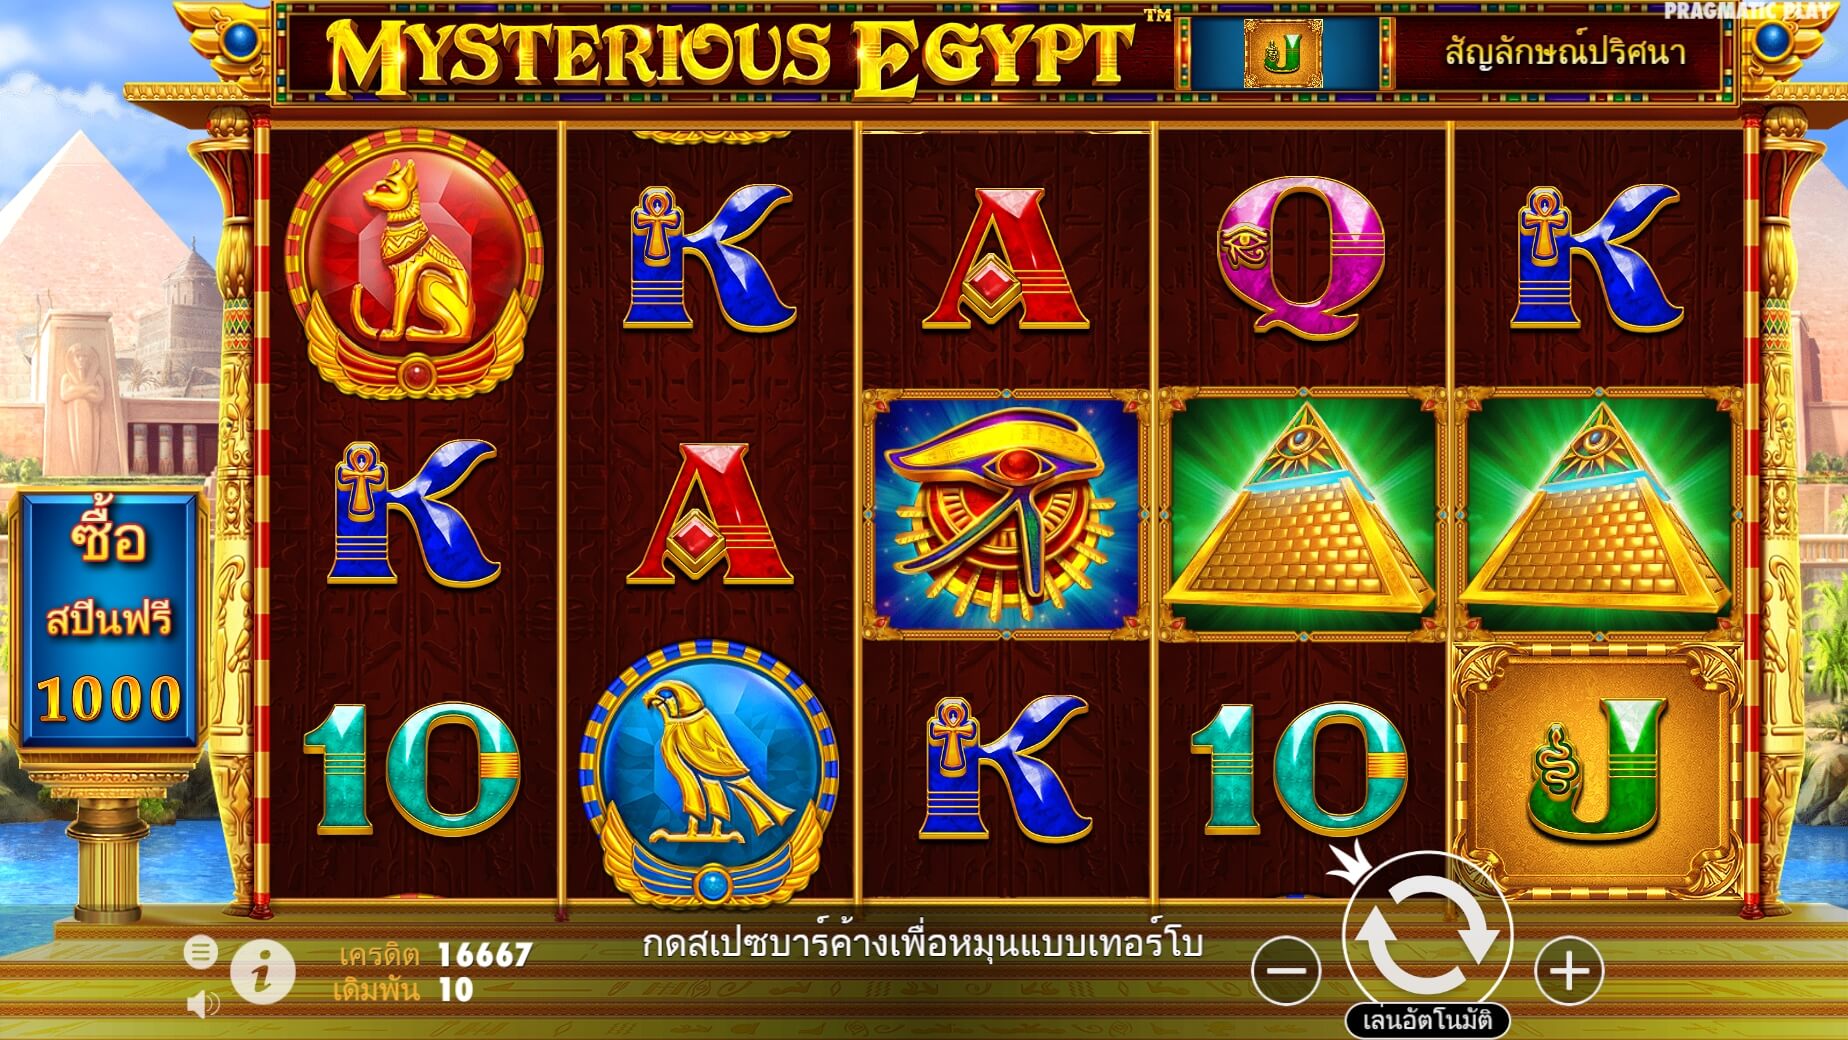 pragmatic play ฟรีเครดิต Mysterious Egyp Superslot เครดิตฟรี 300